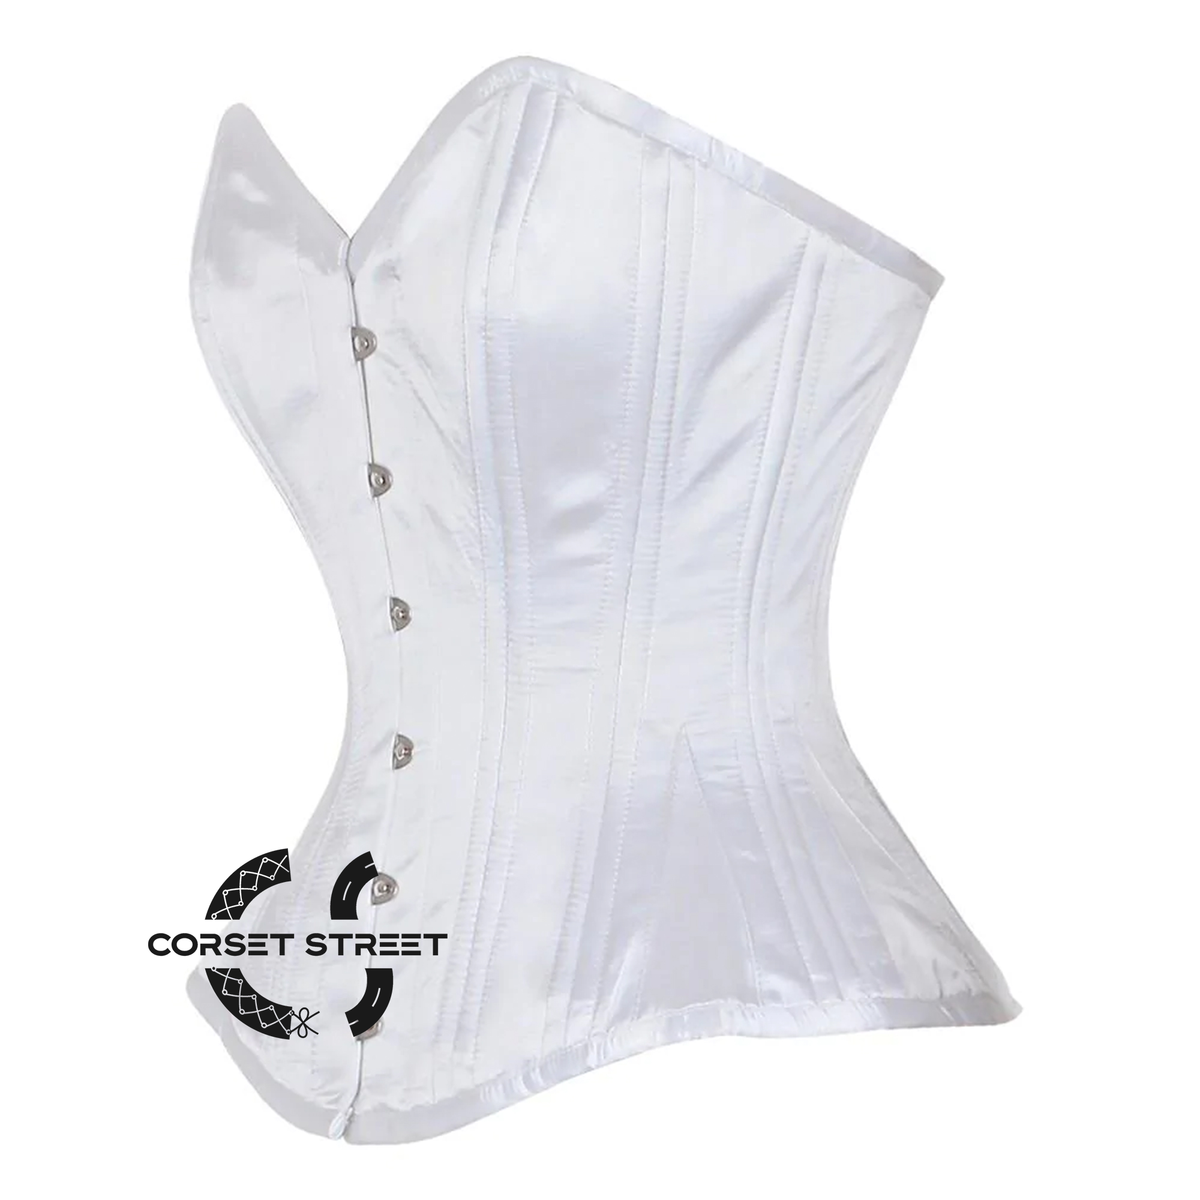 White Satin Burlesque Double Bone Waist Cincher Costume Gothic Corset Overbust Top